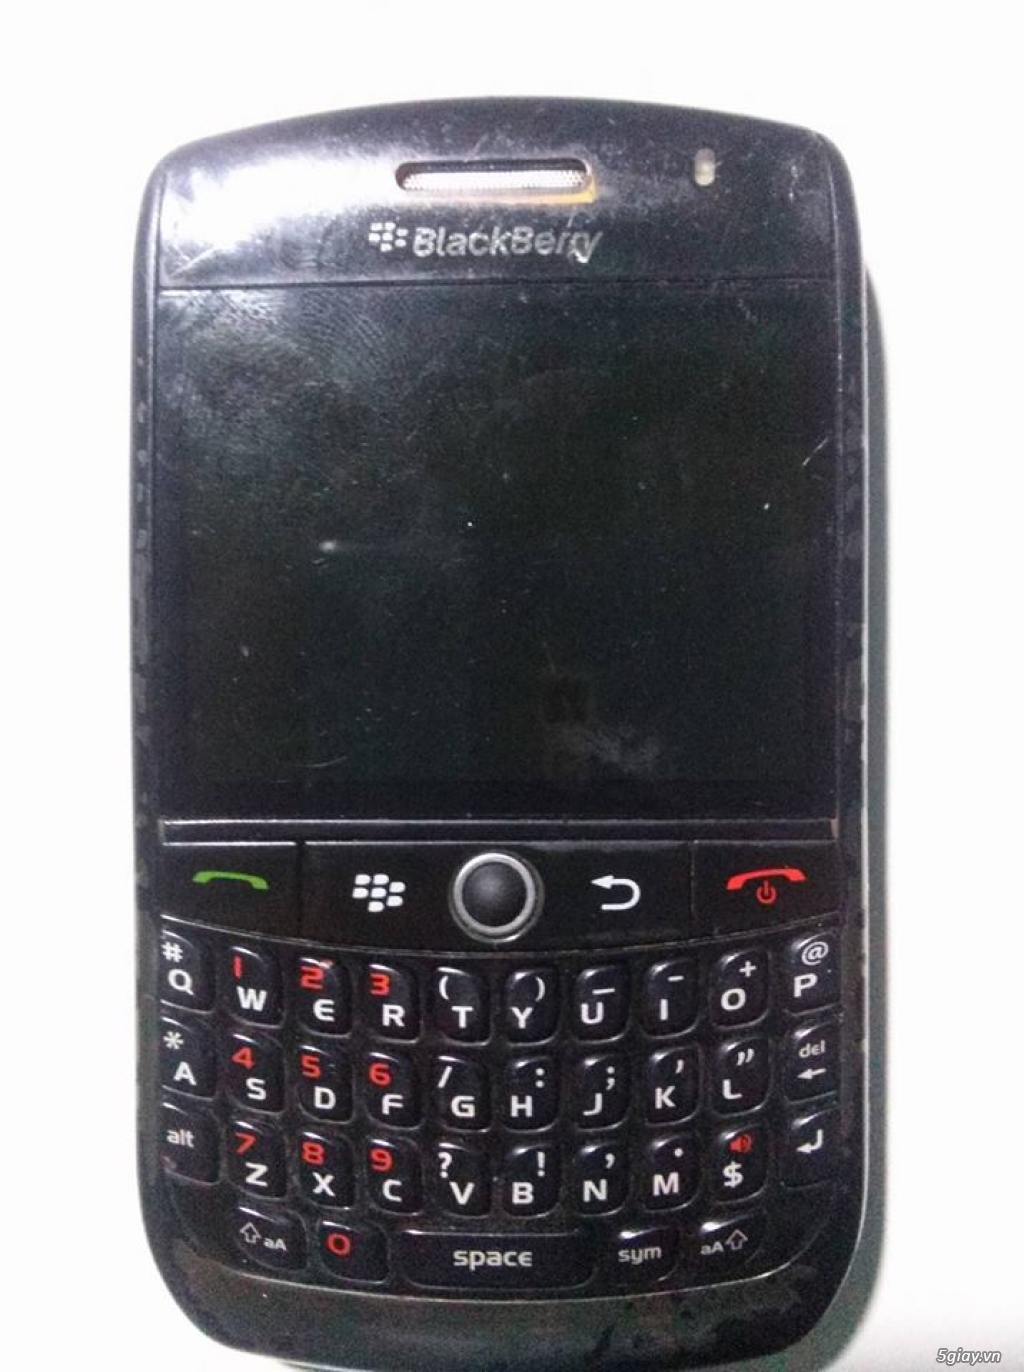 blackberry 6710,7290,8100,8300 lỗi nhẹ giá xác - 10